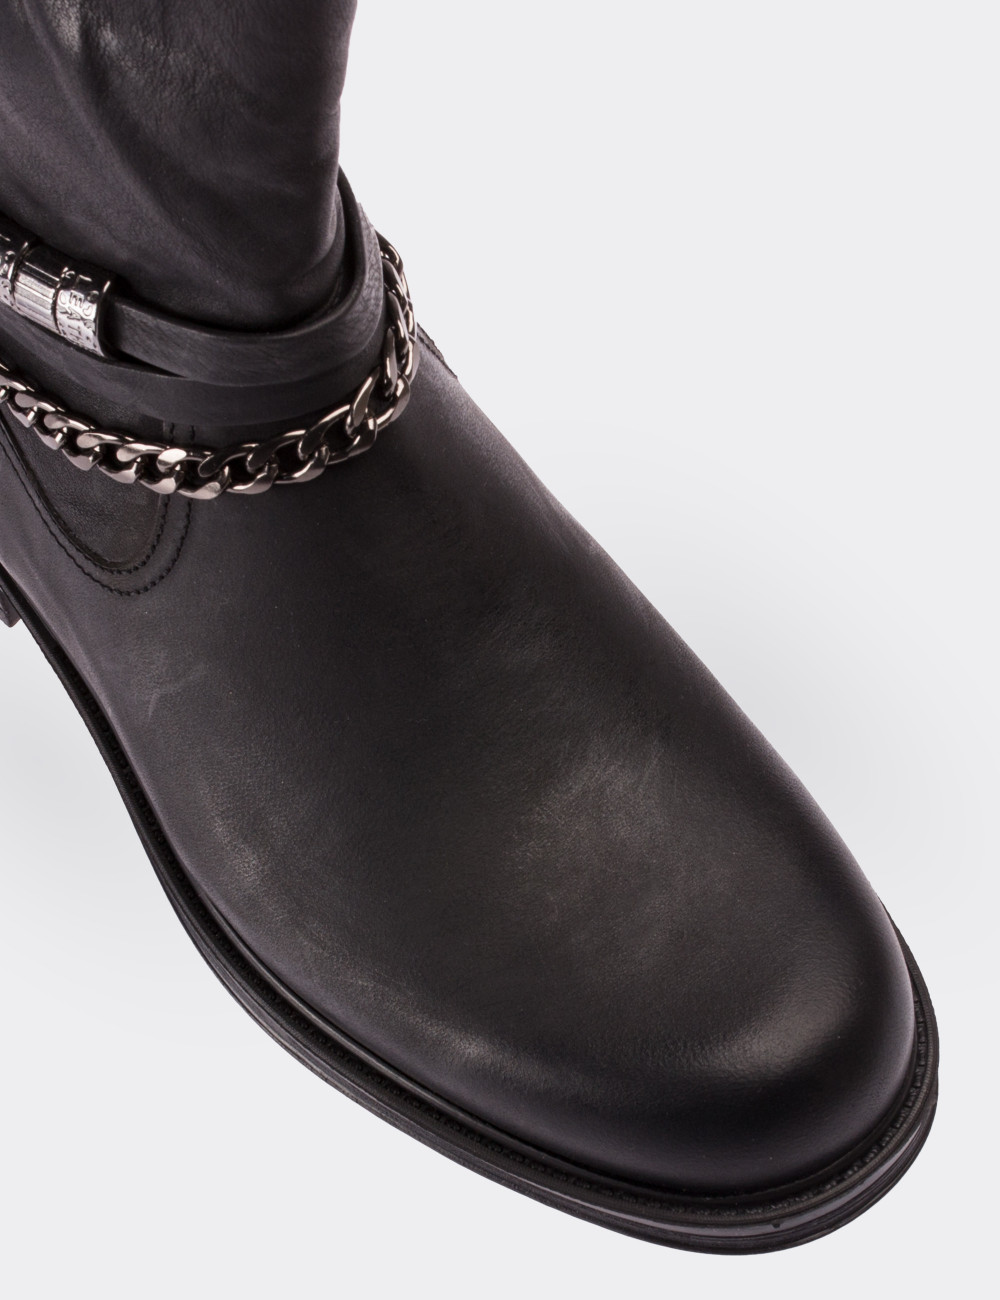 Black Nubuck Leather Boots - 10321ZSYHC02